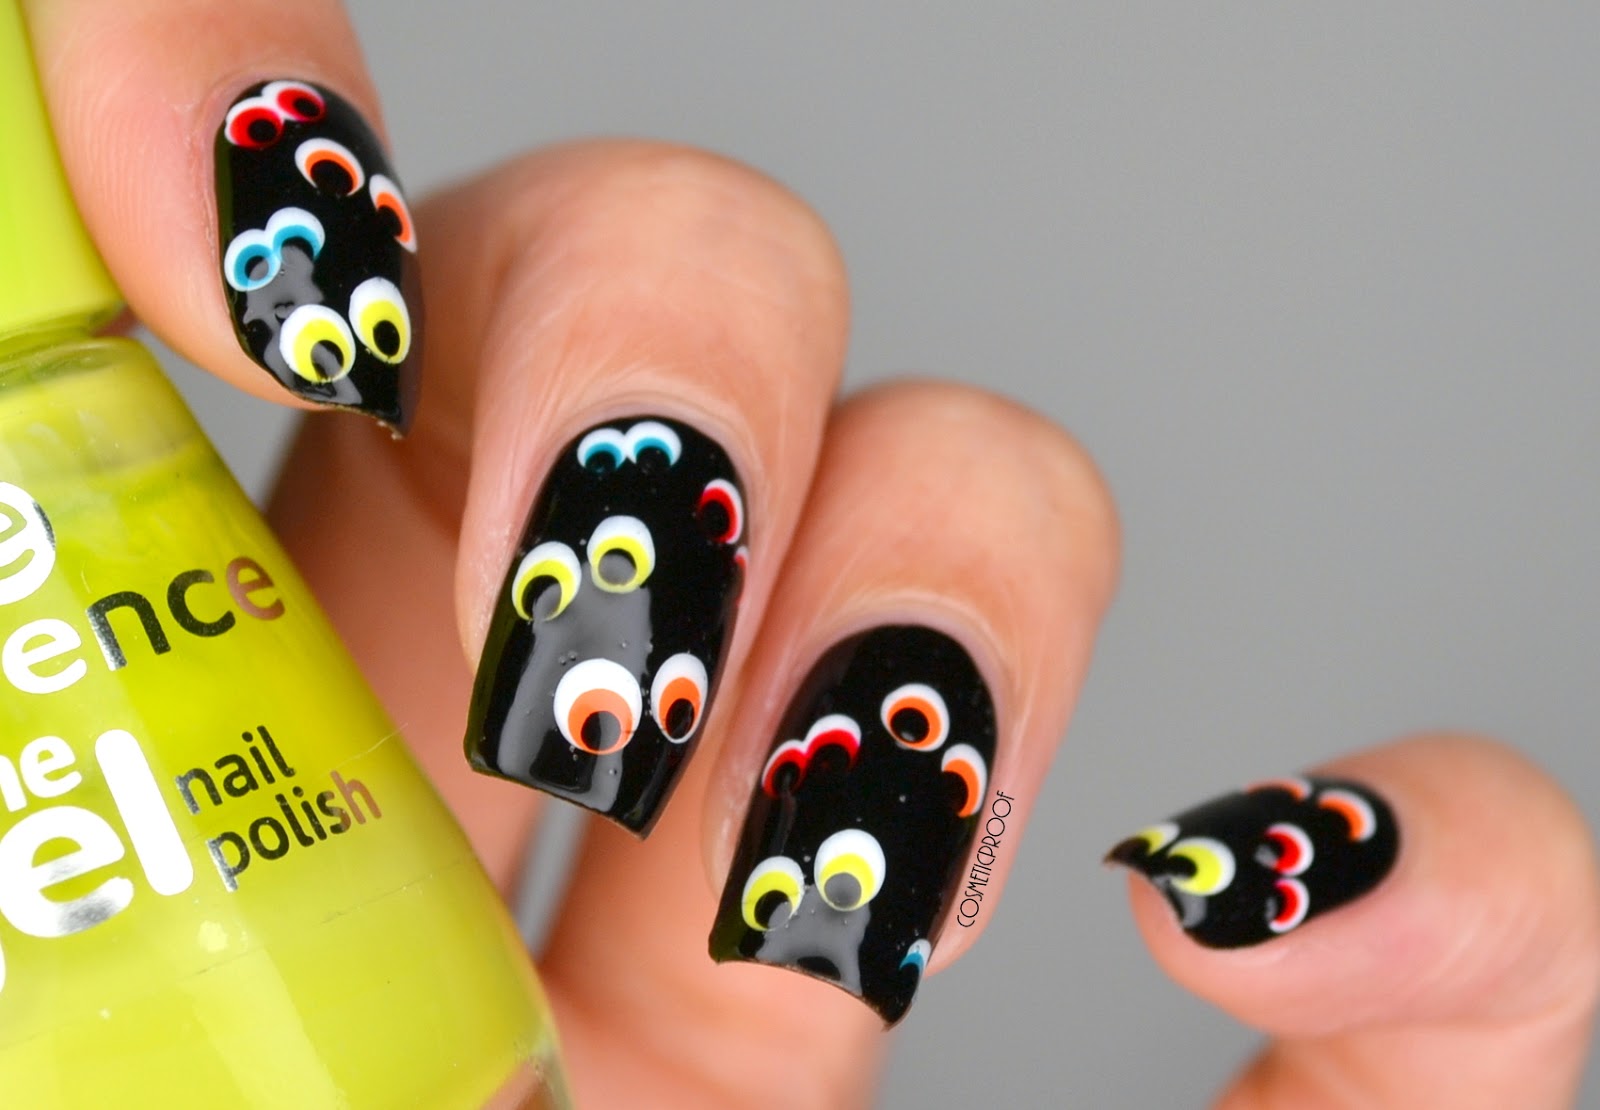 1. "Halloween-inspired nail art ideas" - wide 8